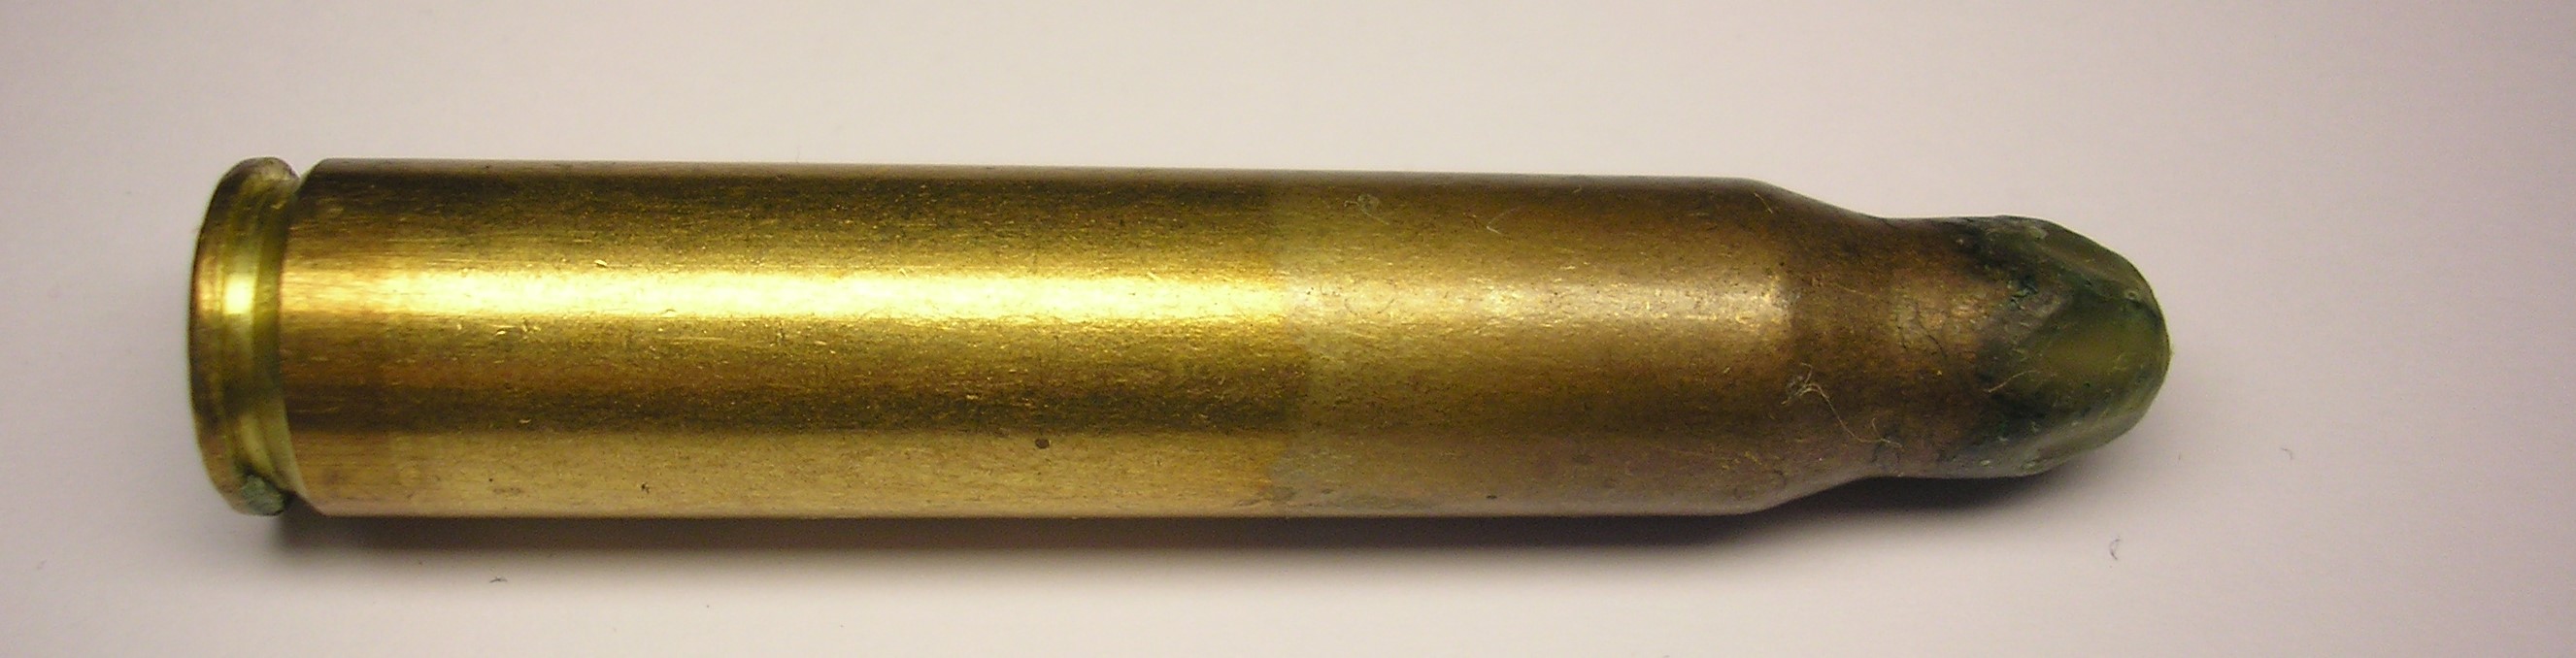 ./ammo/762x63/patroner/Patron-762x63-RA-drivpatron-energa-1957-1.JPG